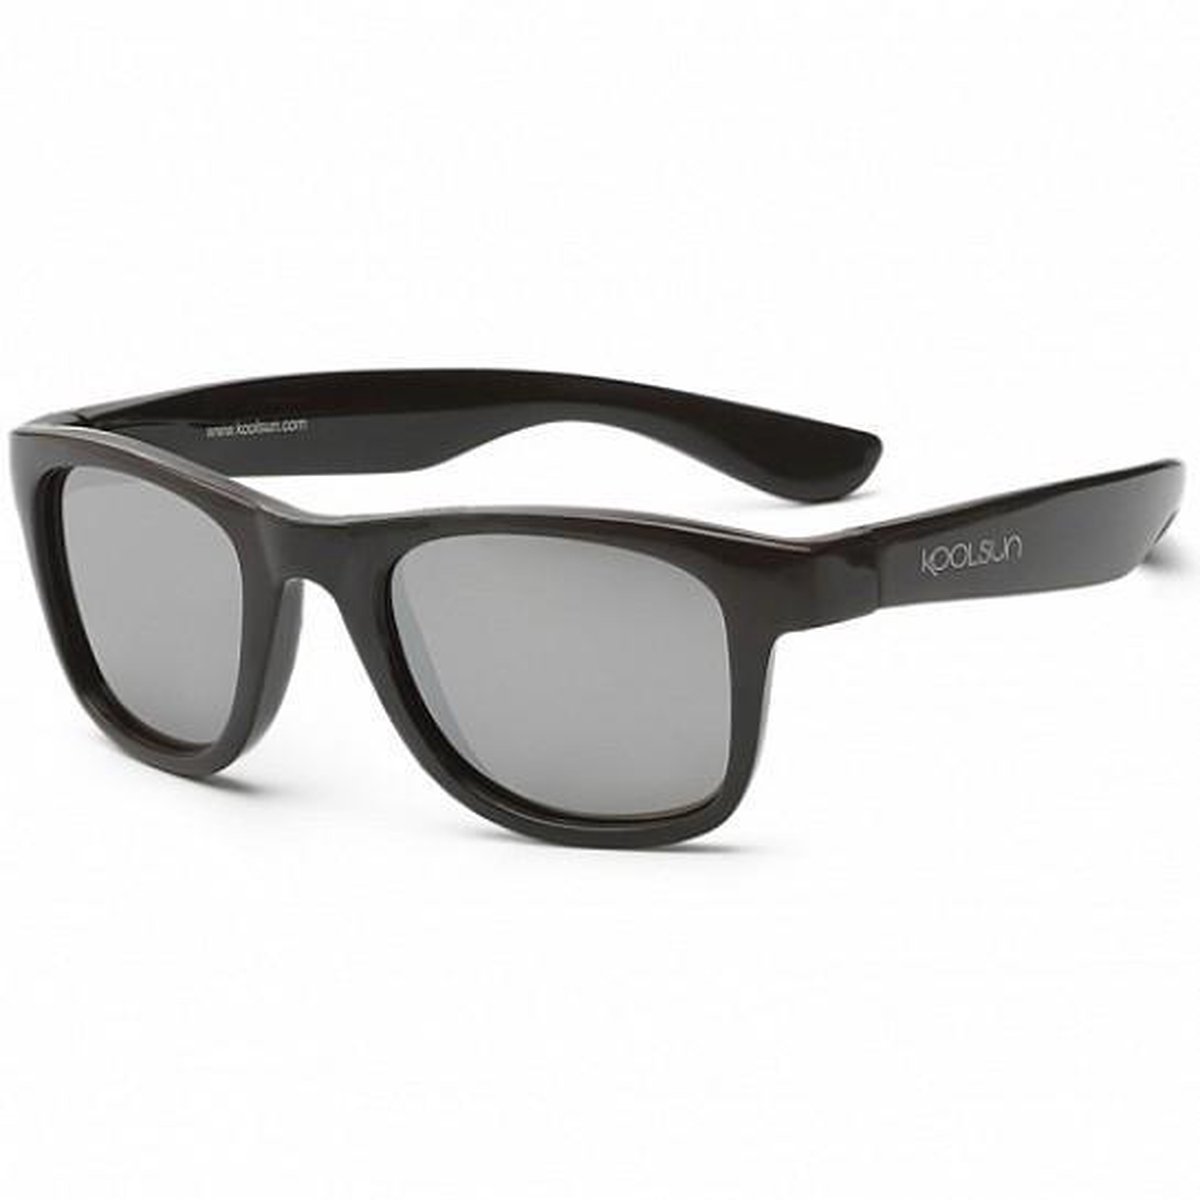 KOOLSUN - Wave - Kinder zonnebril - Black Onyx - 1-5 jaar- UV400 - Categorie 3